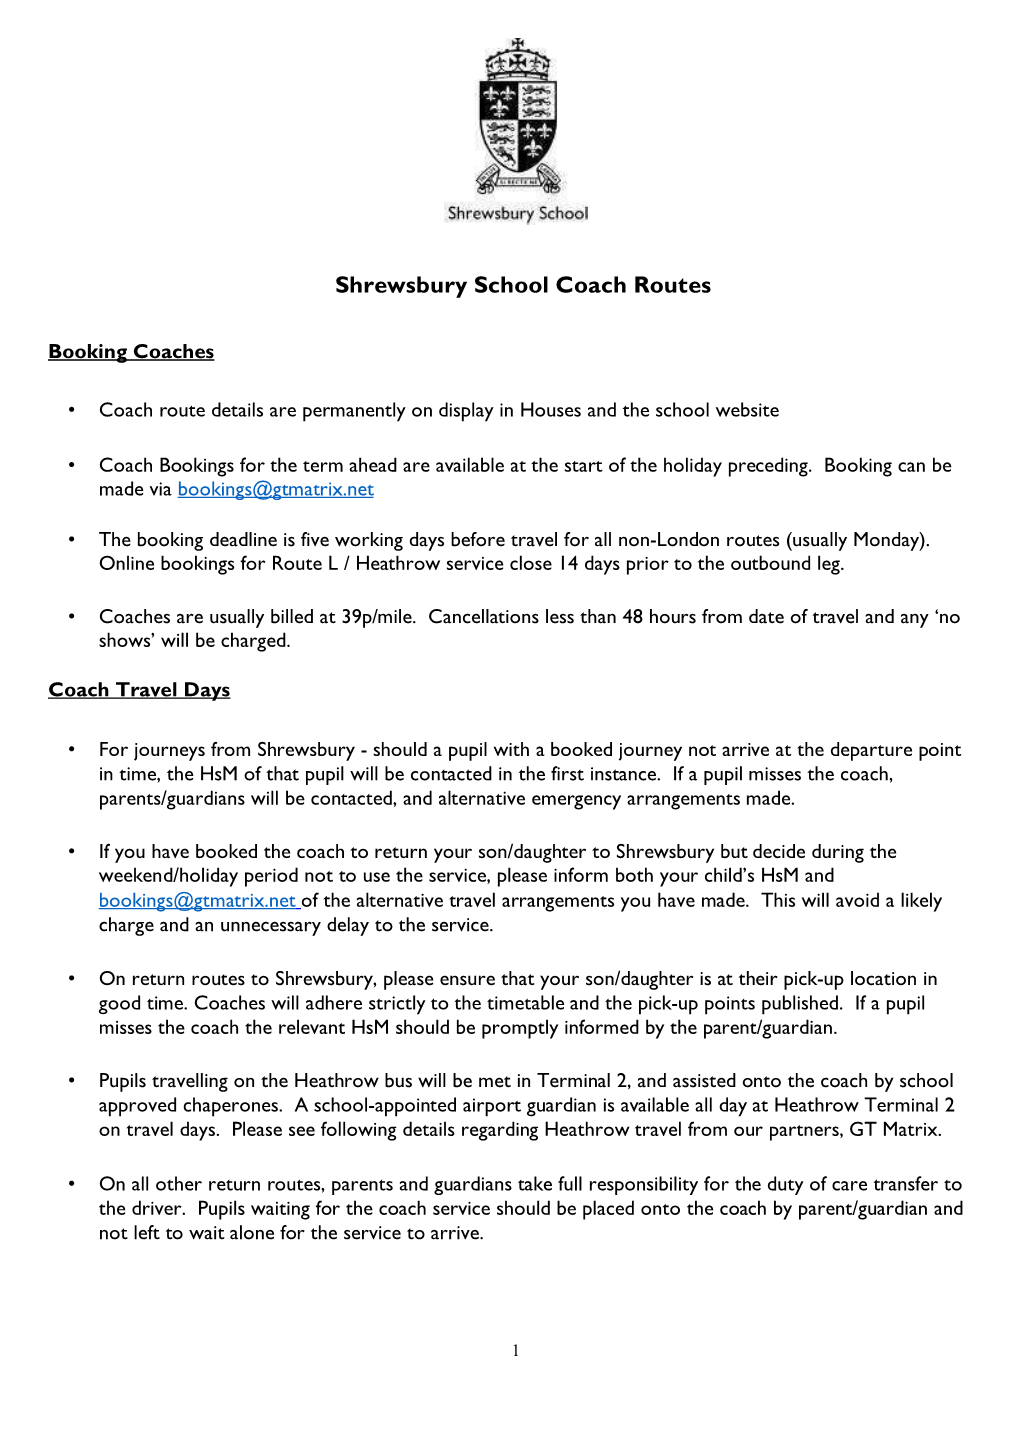 Shrewsbury School Coach Routes